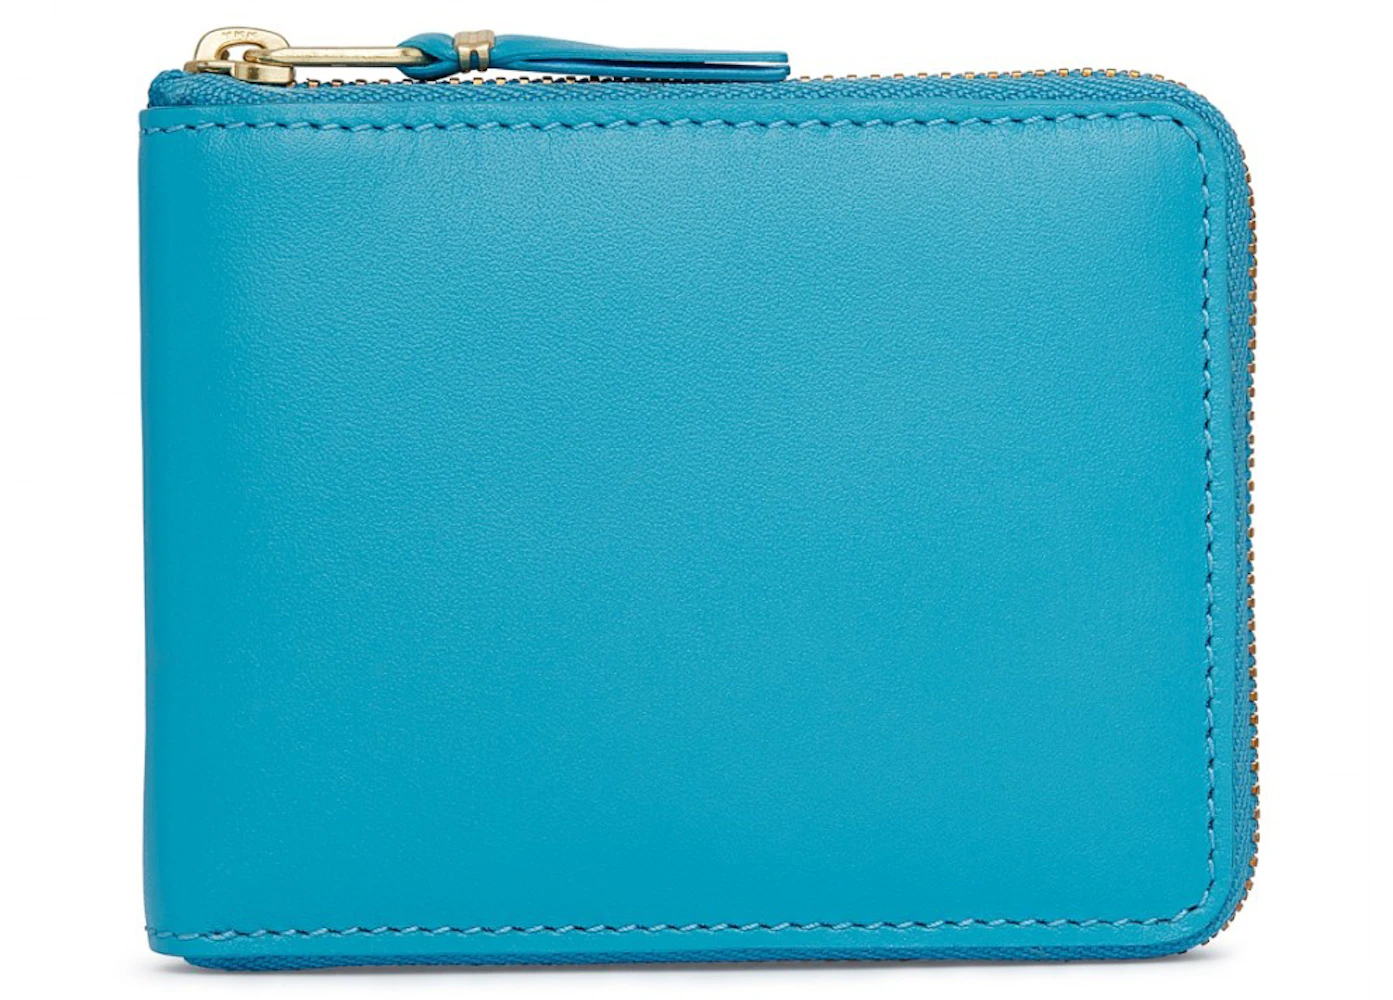 Comme des Garcons SA7100 Colour Plain Wallet Blue in Leather with Gold ...